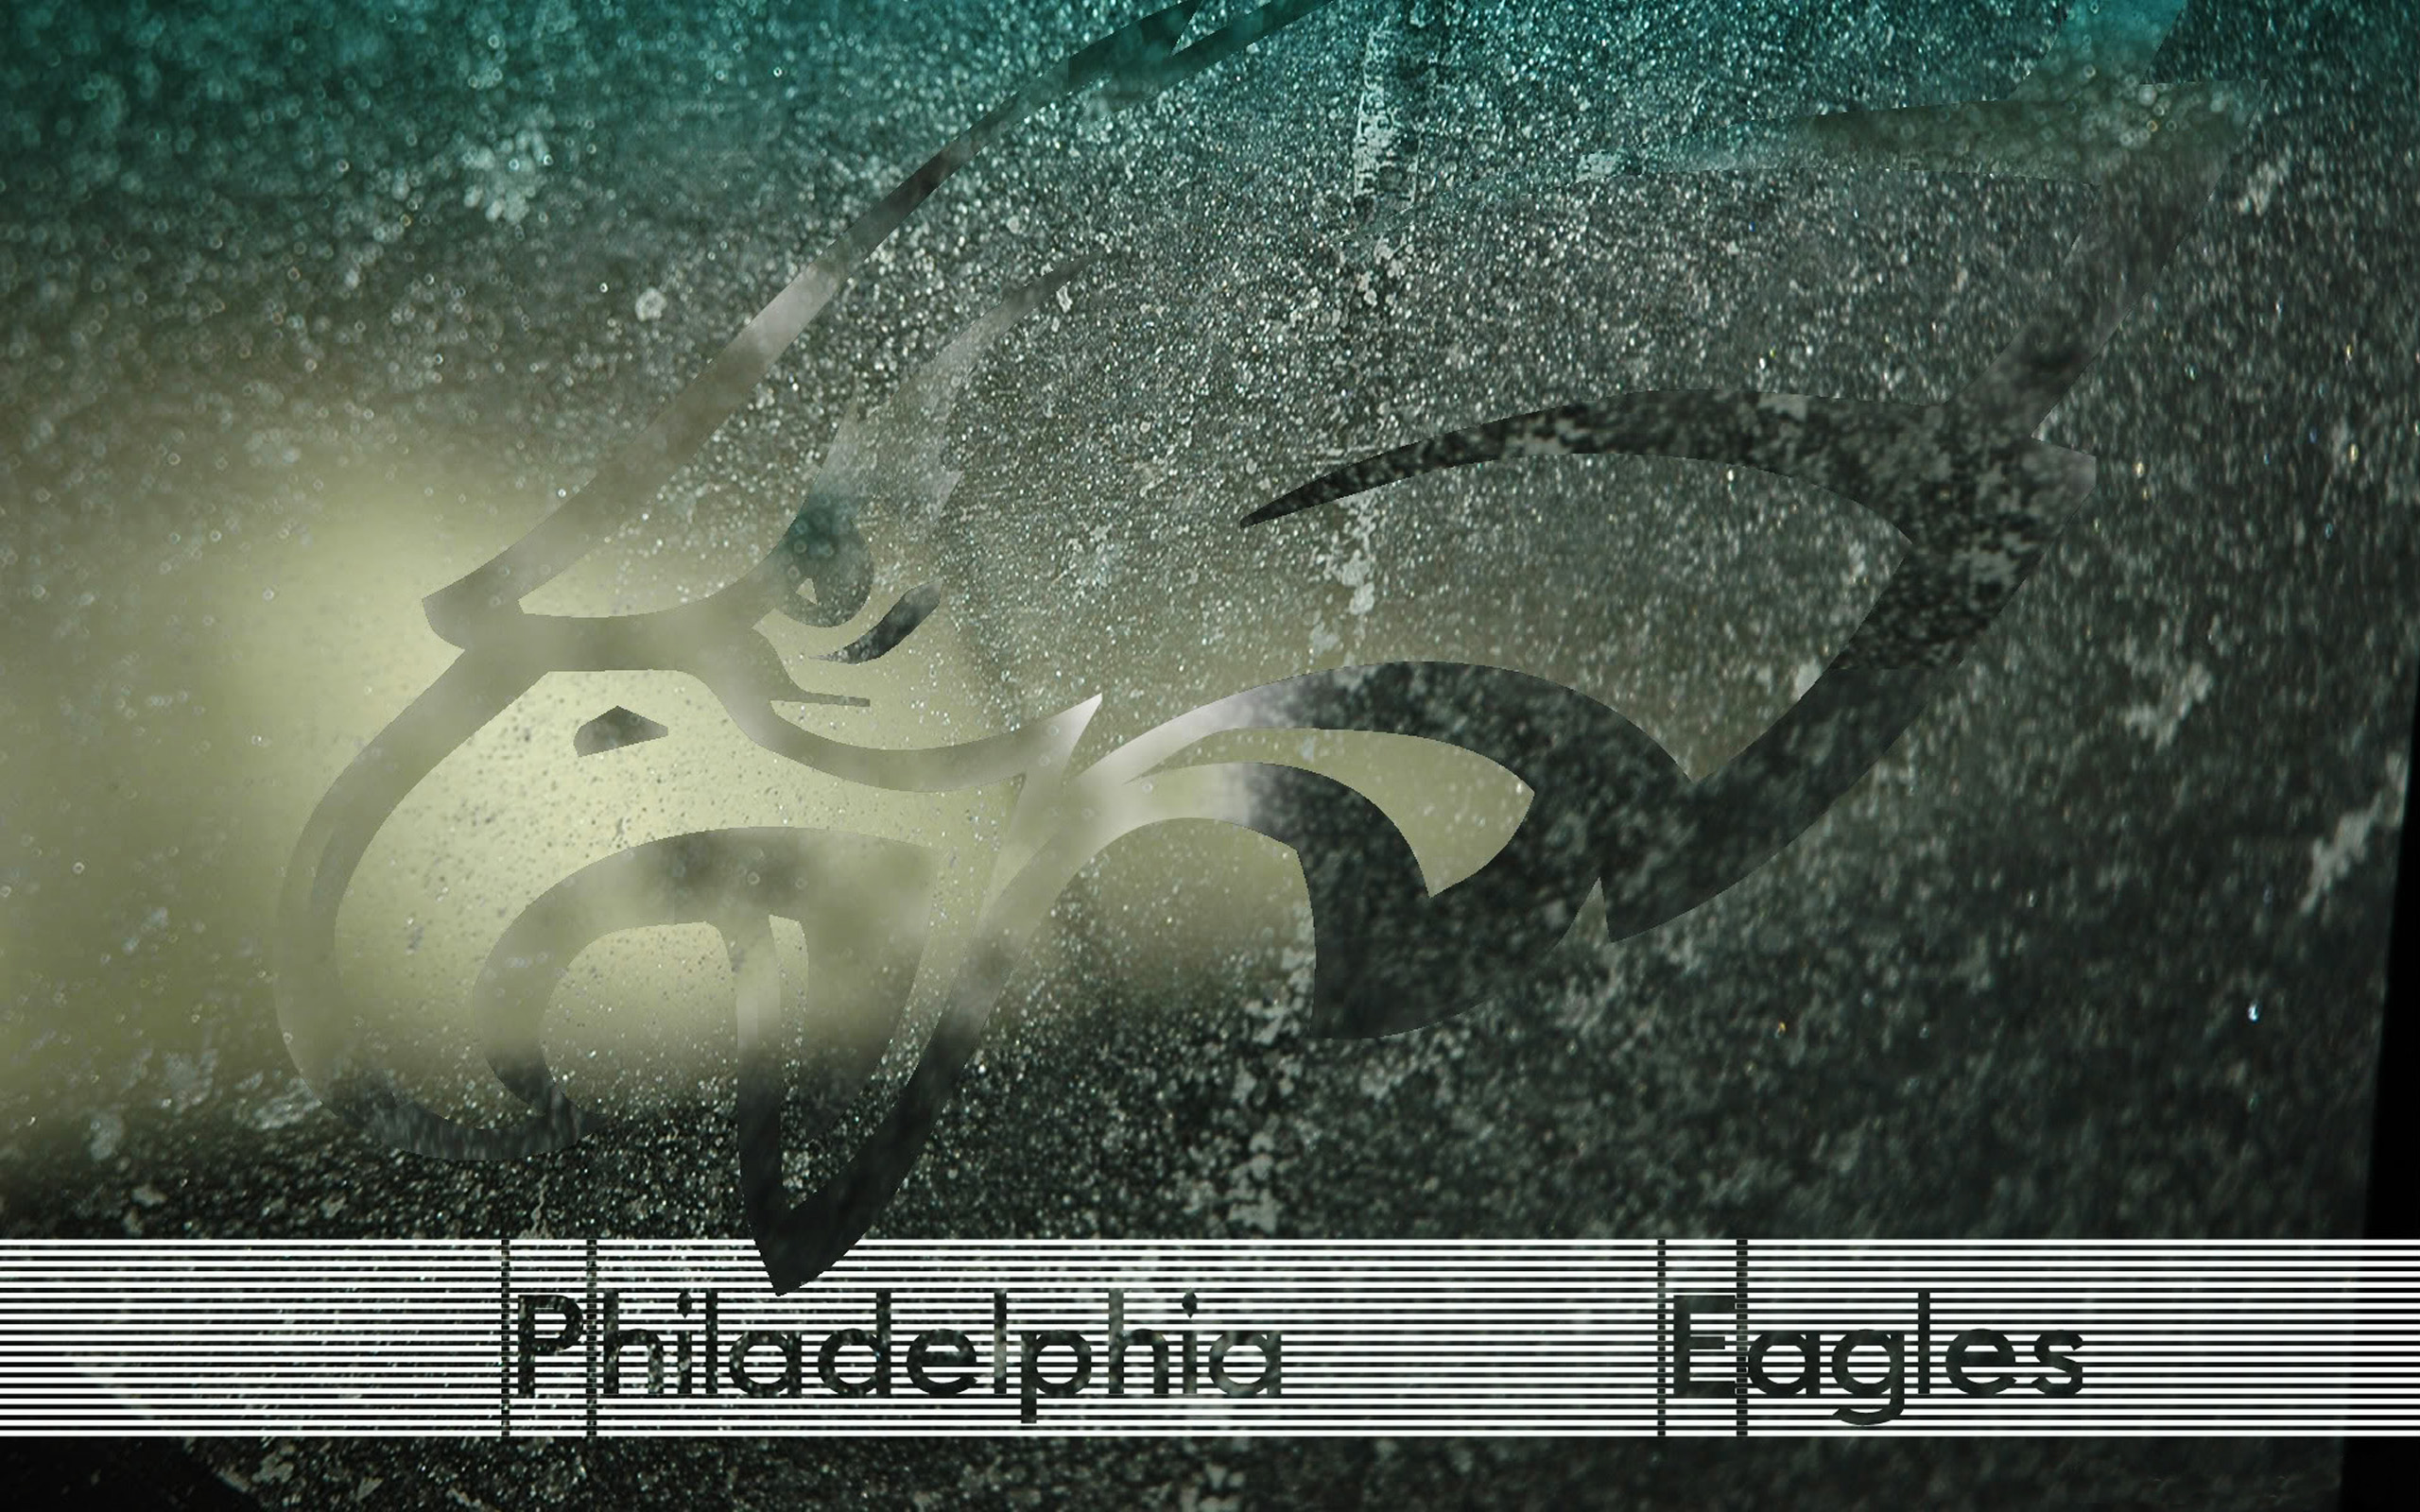 cool philadelphia eagles backgrounds